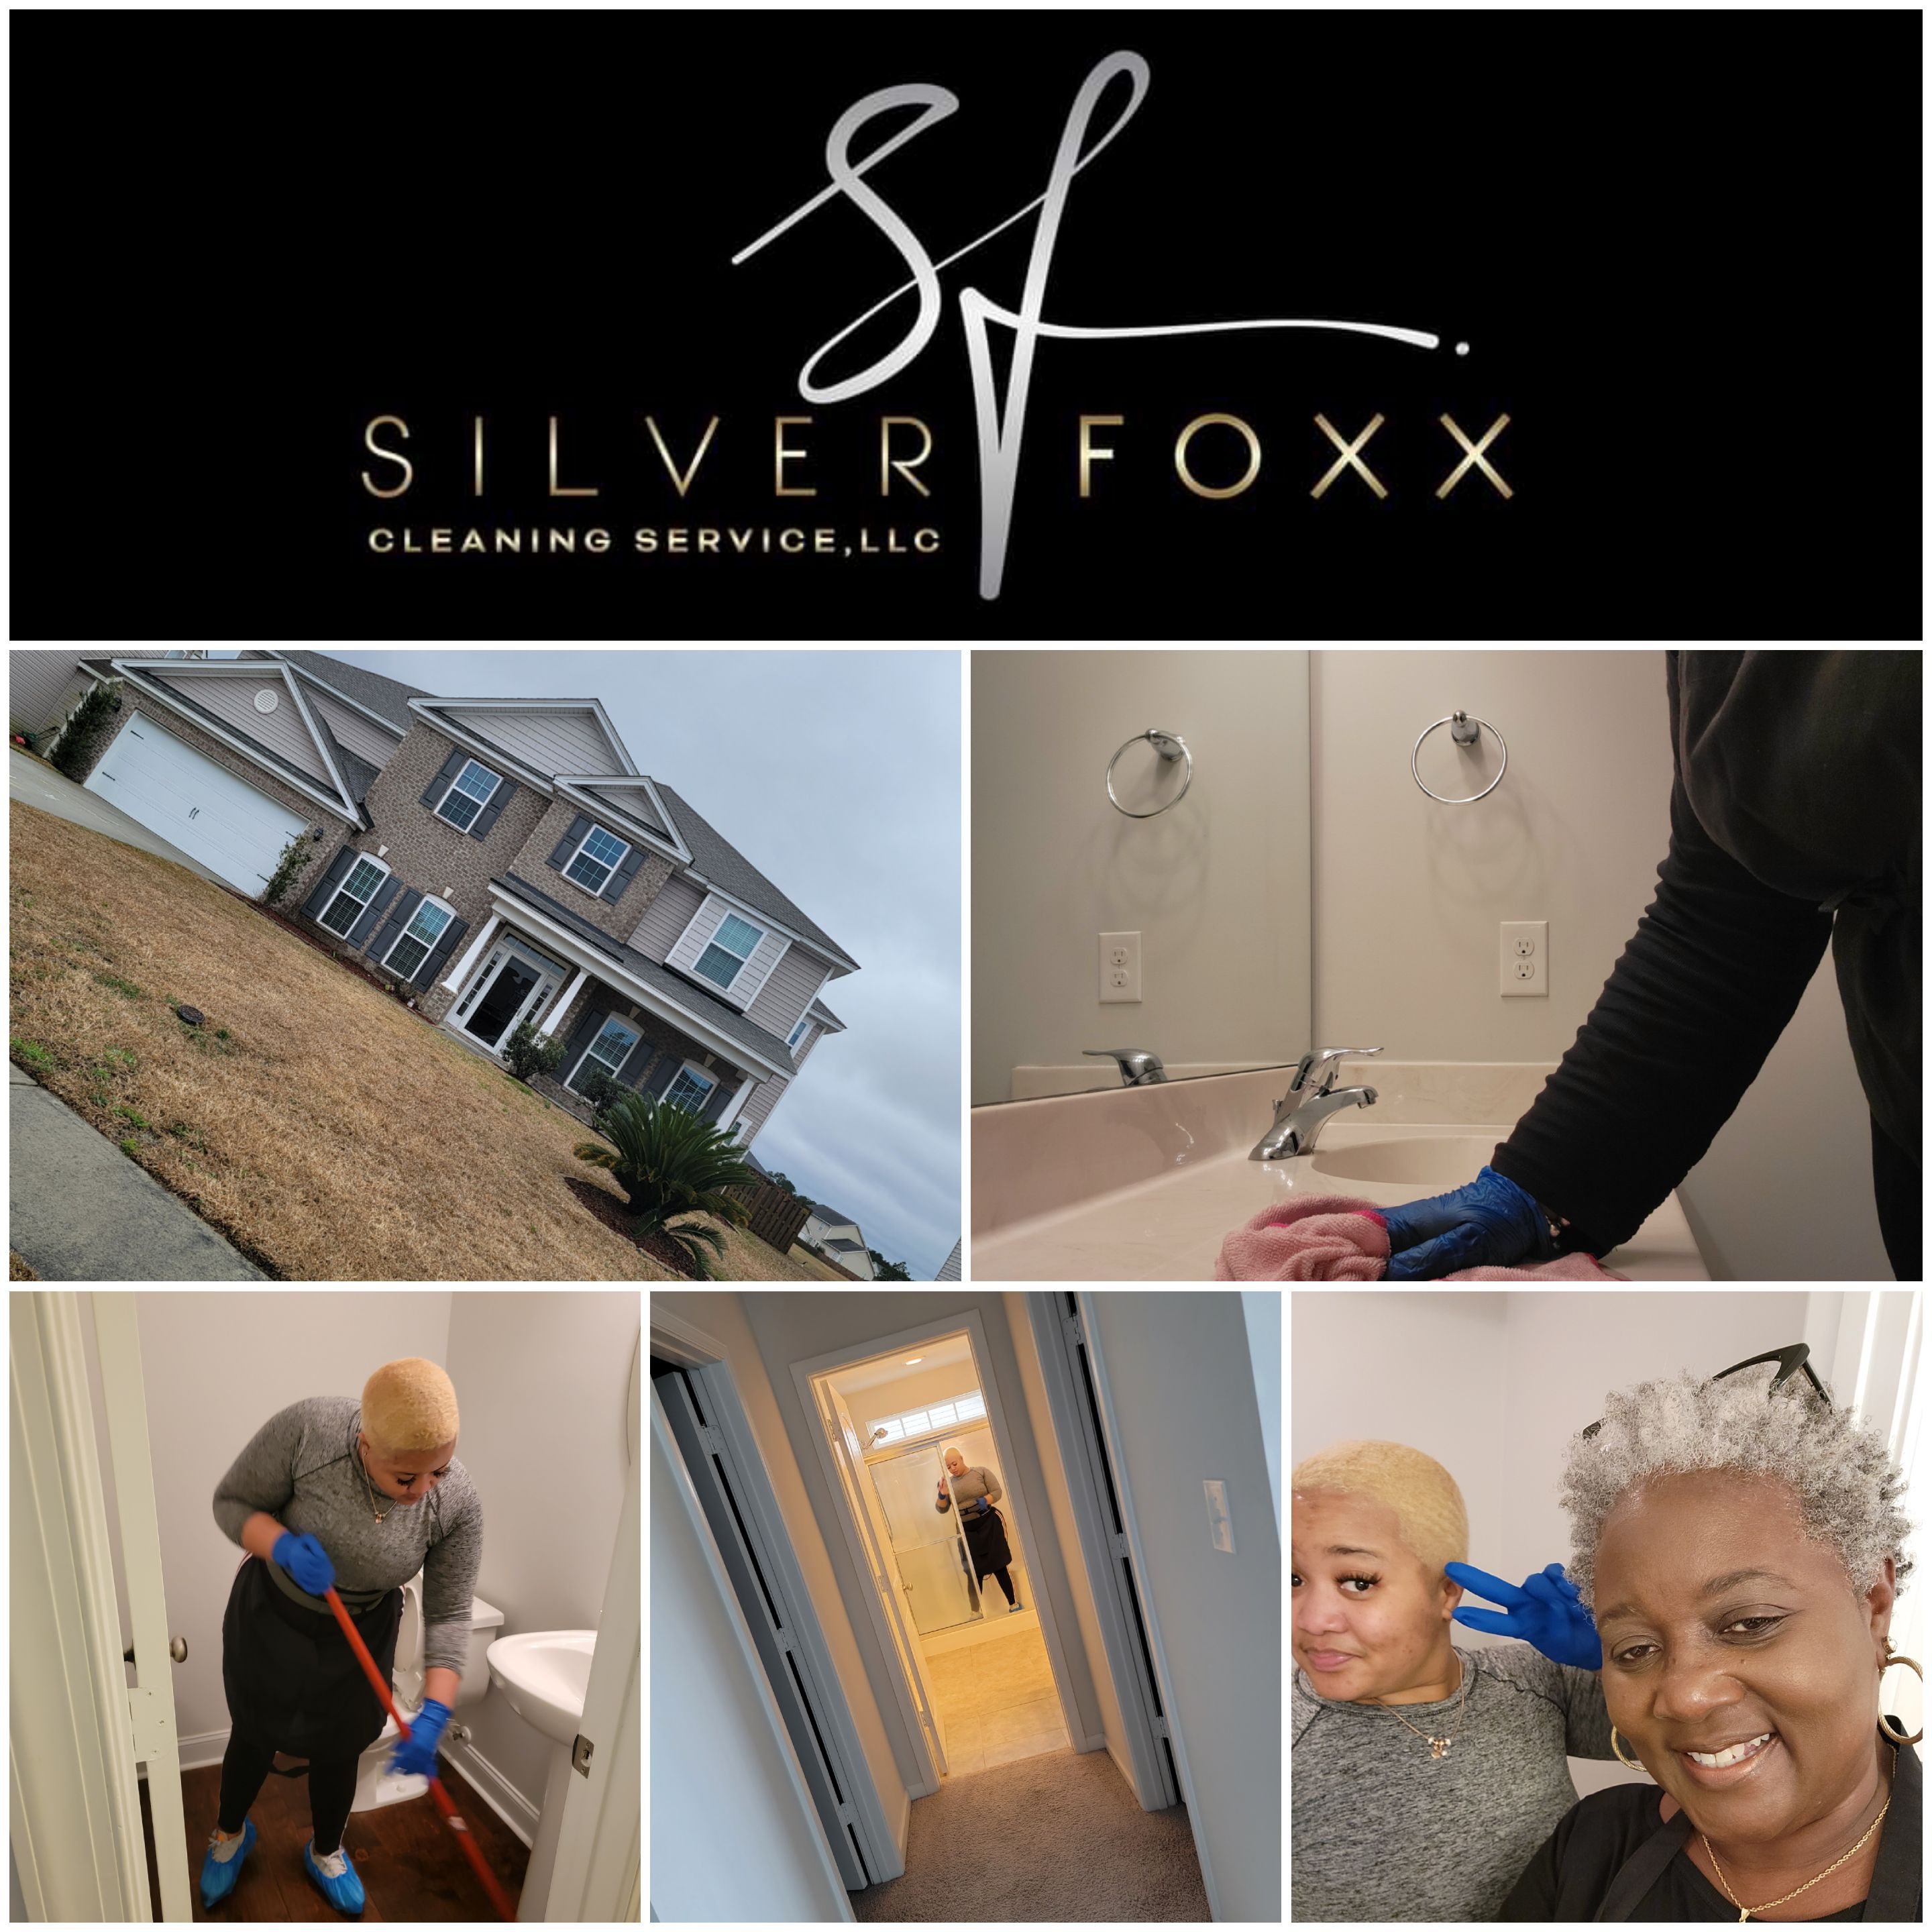 SilverFoxx Cleaning Service, LLC Logo